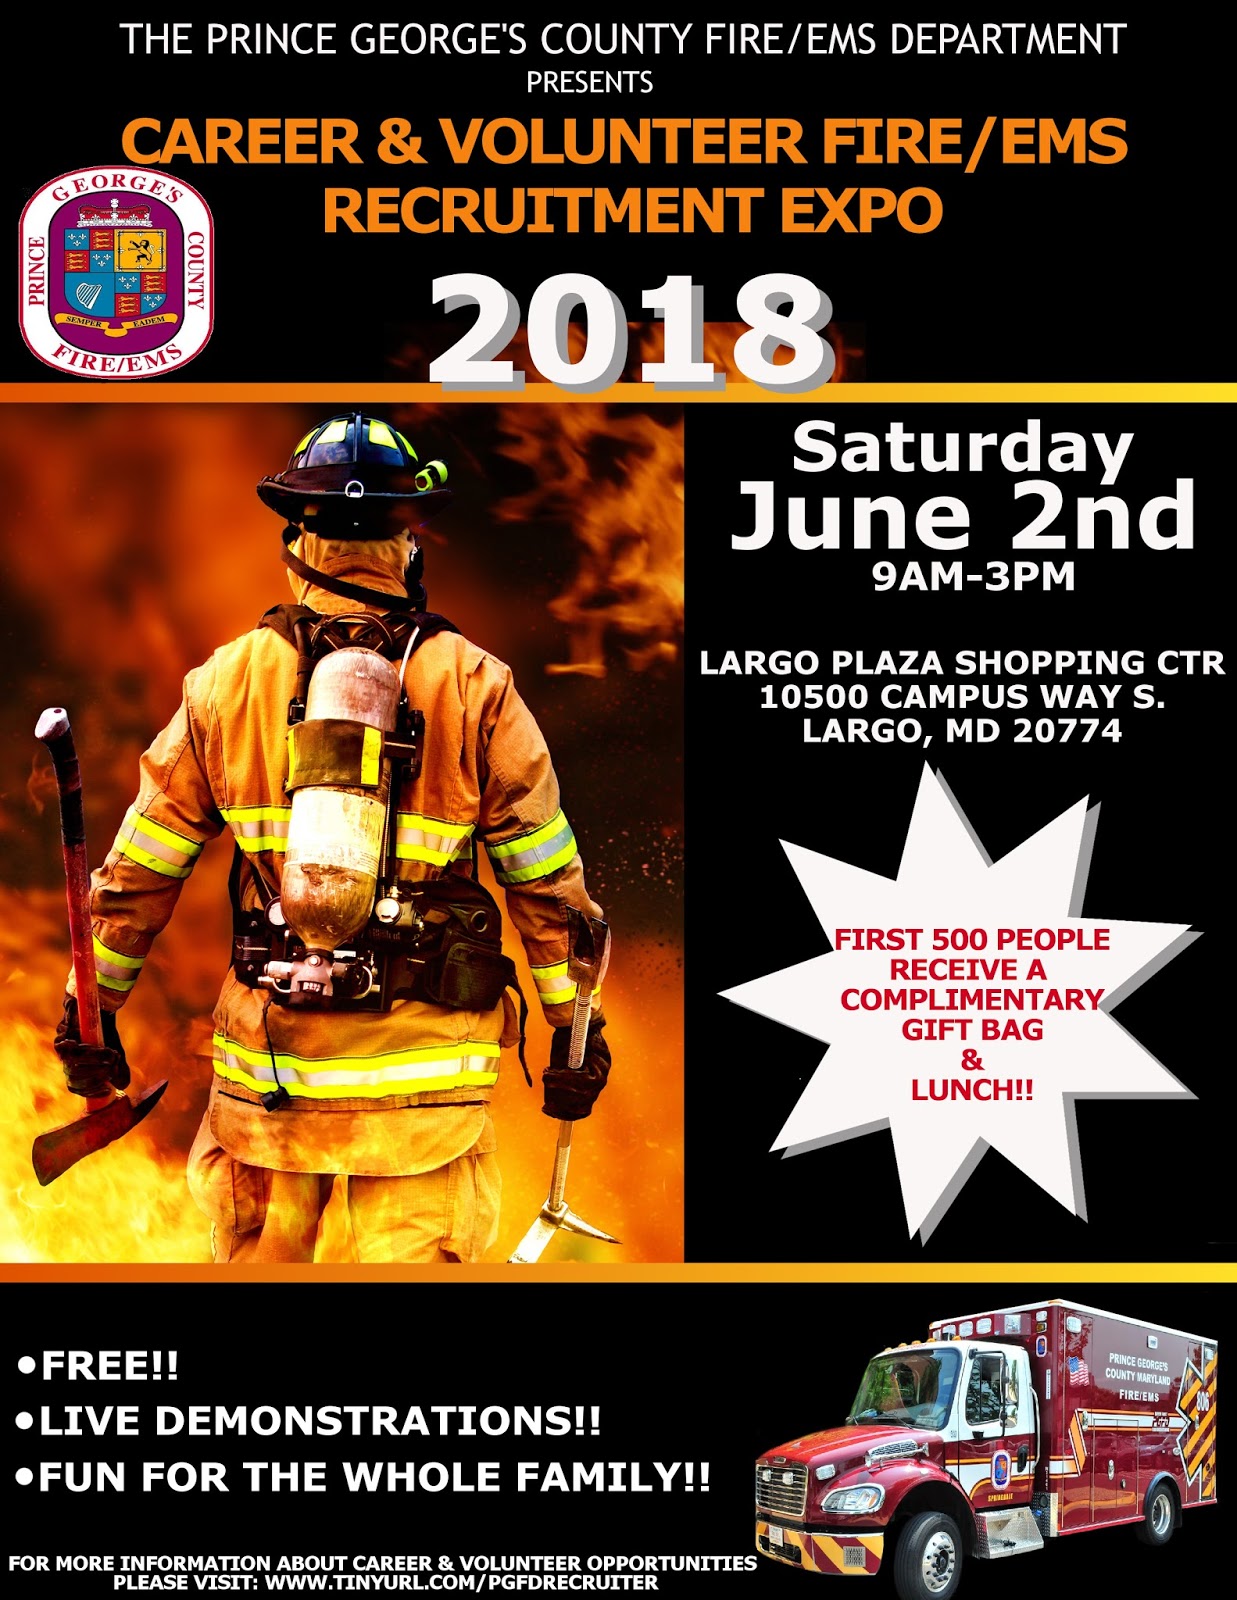 pgfd-career-volunteer-fire-ems-recruitment-expo